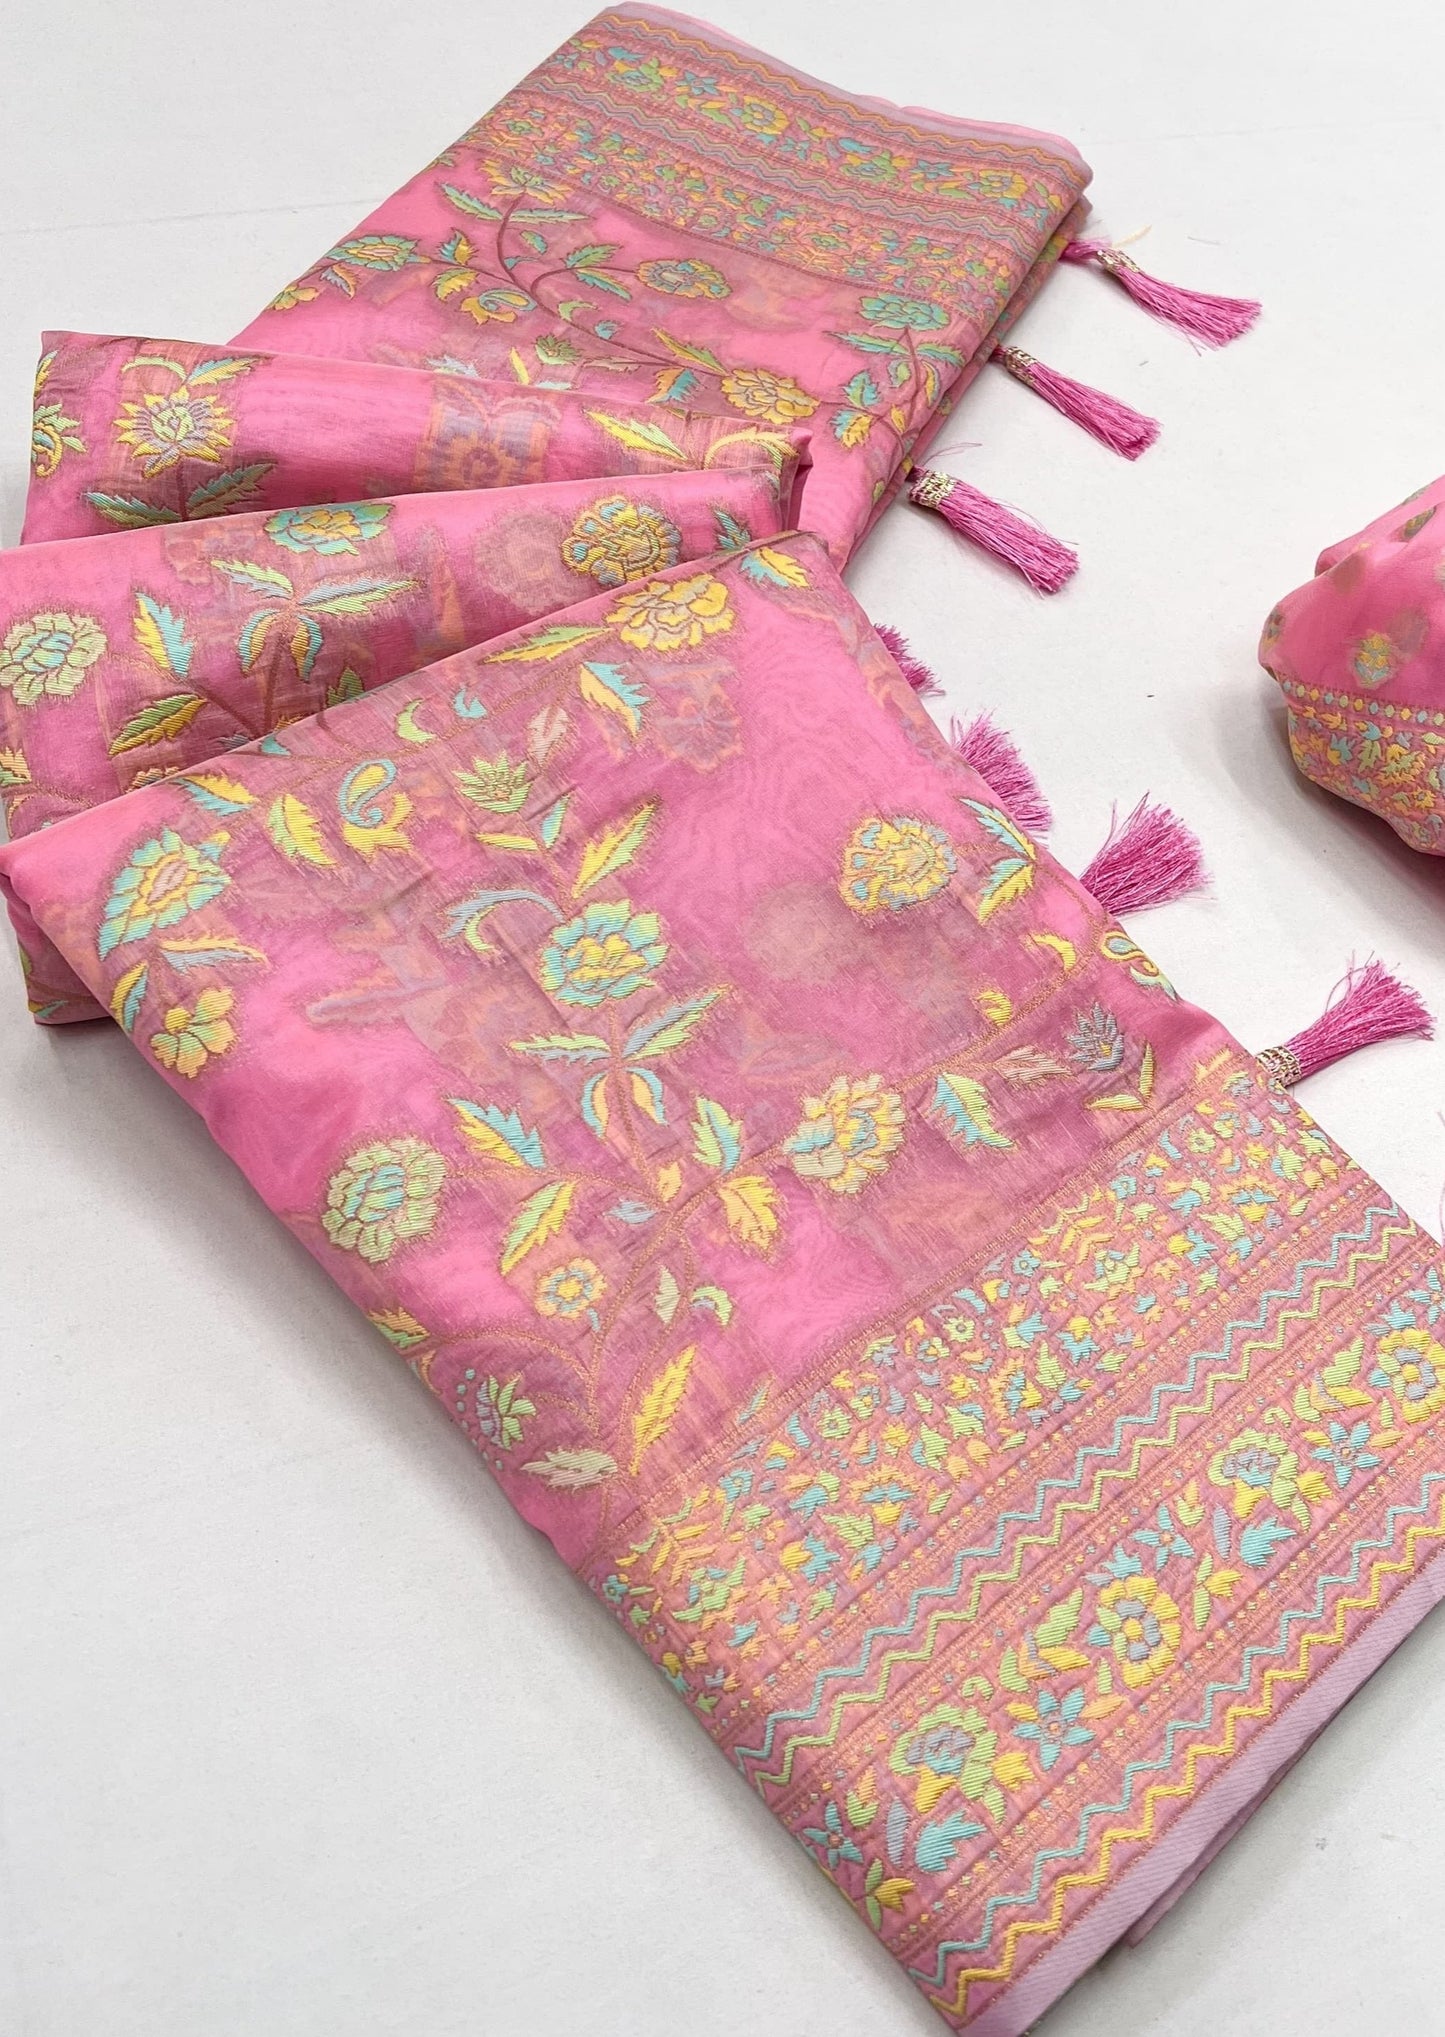 Kashmiri organza pink embroidered bridal saree online shopping price for wedding.